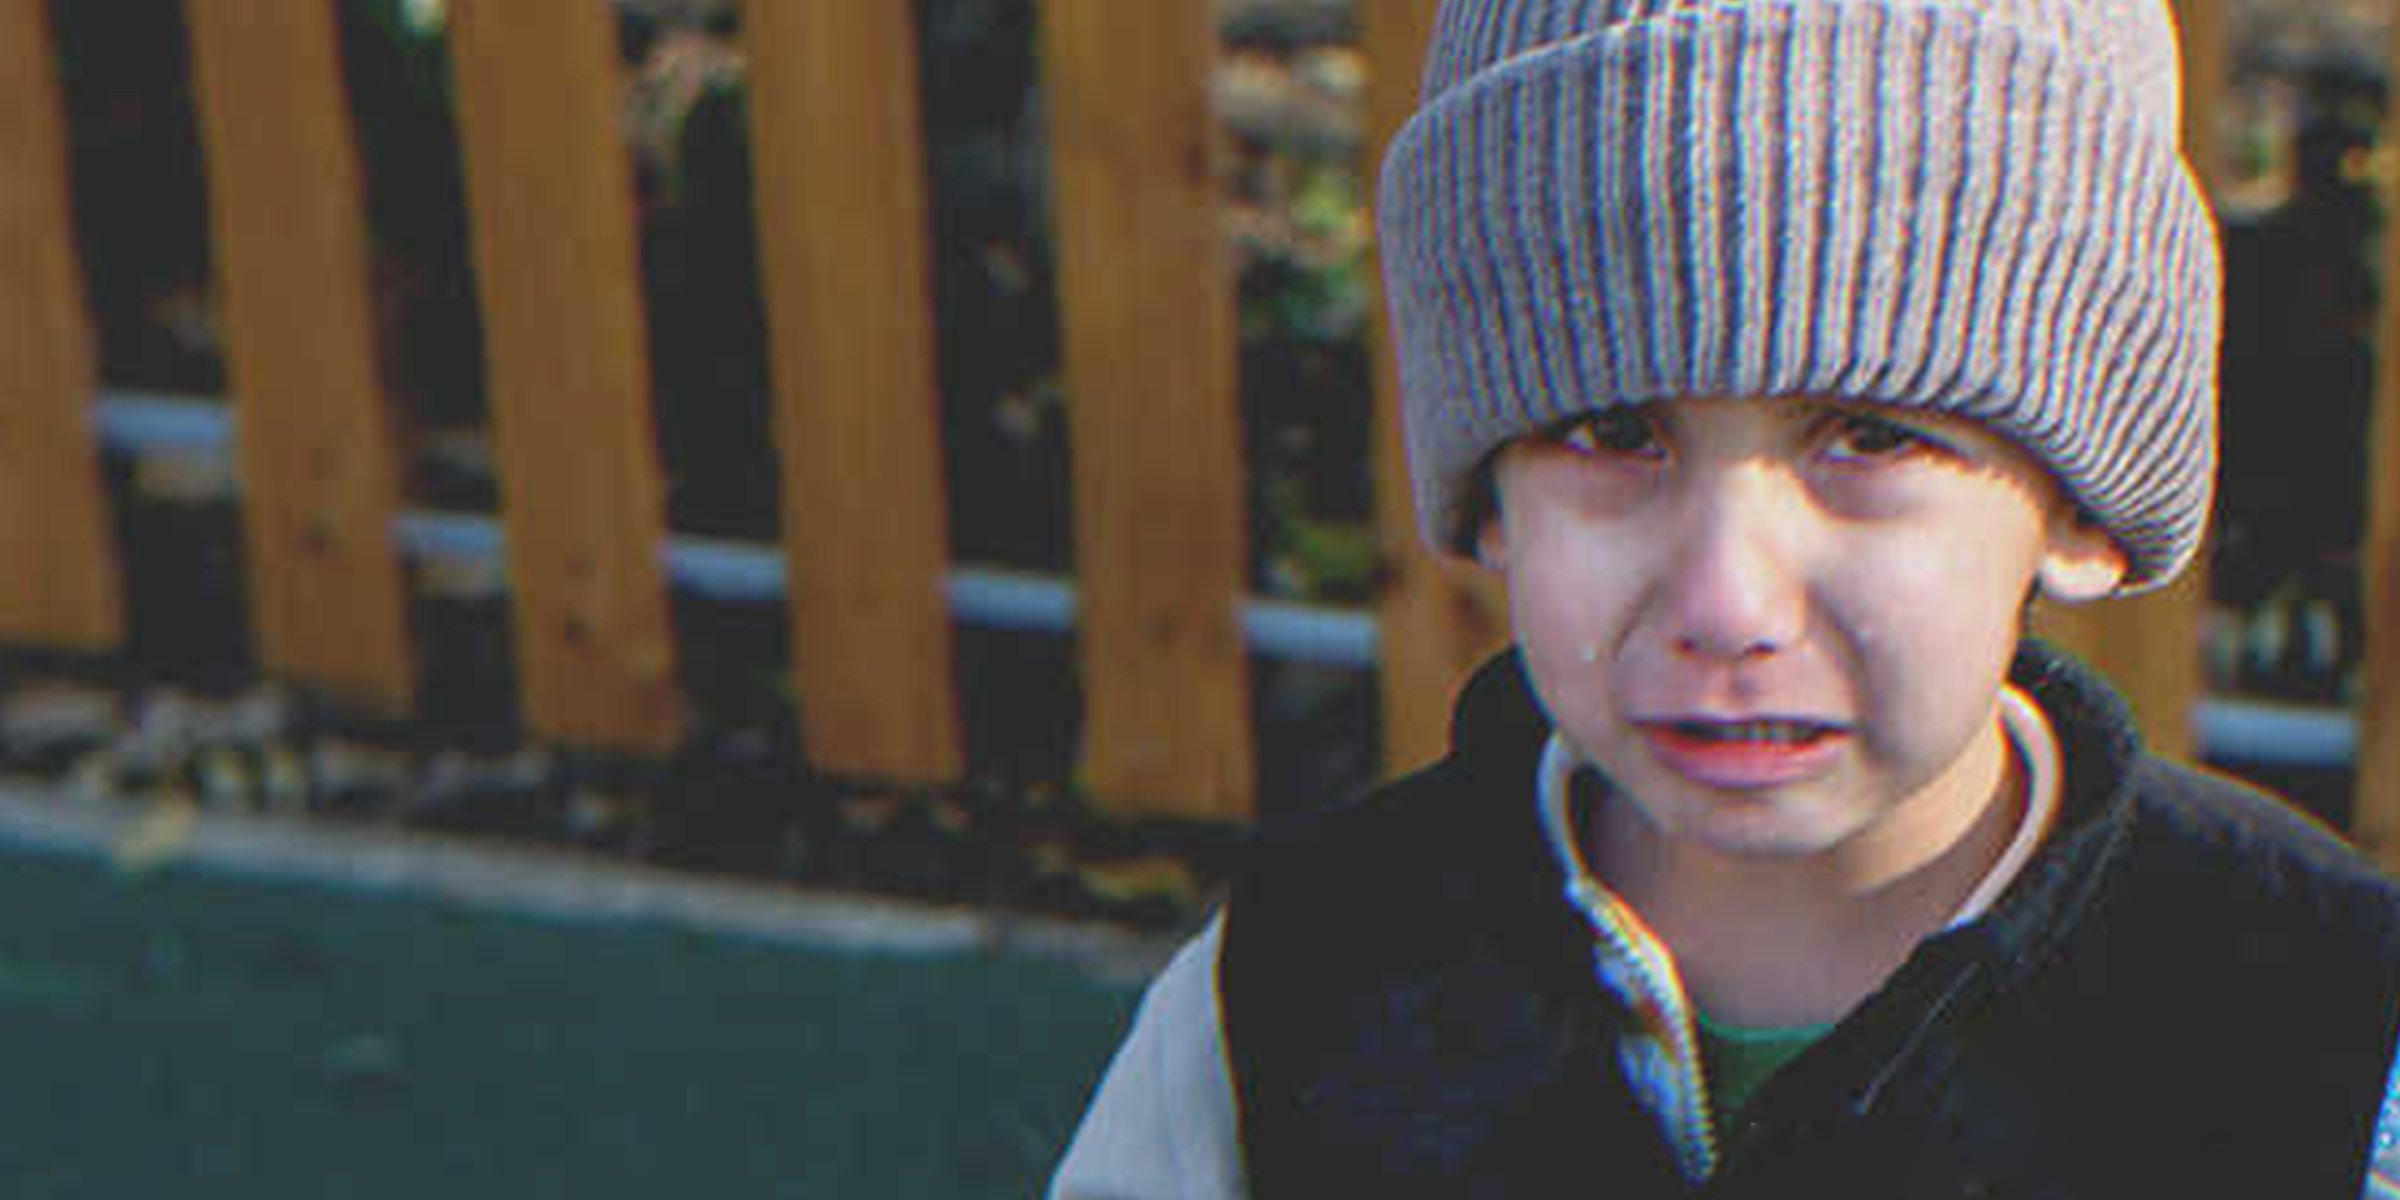 Niño llorando | Fuente: Shutterstock